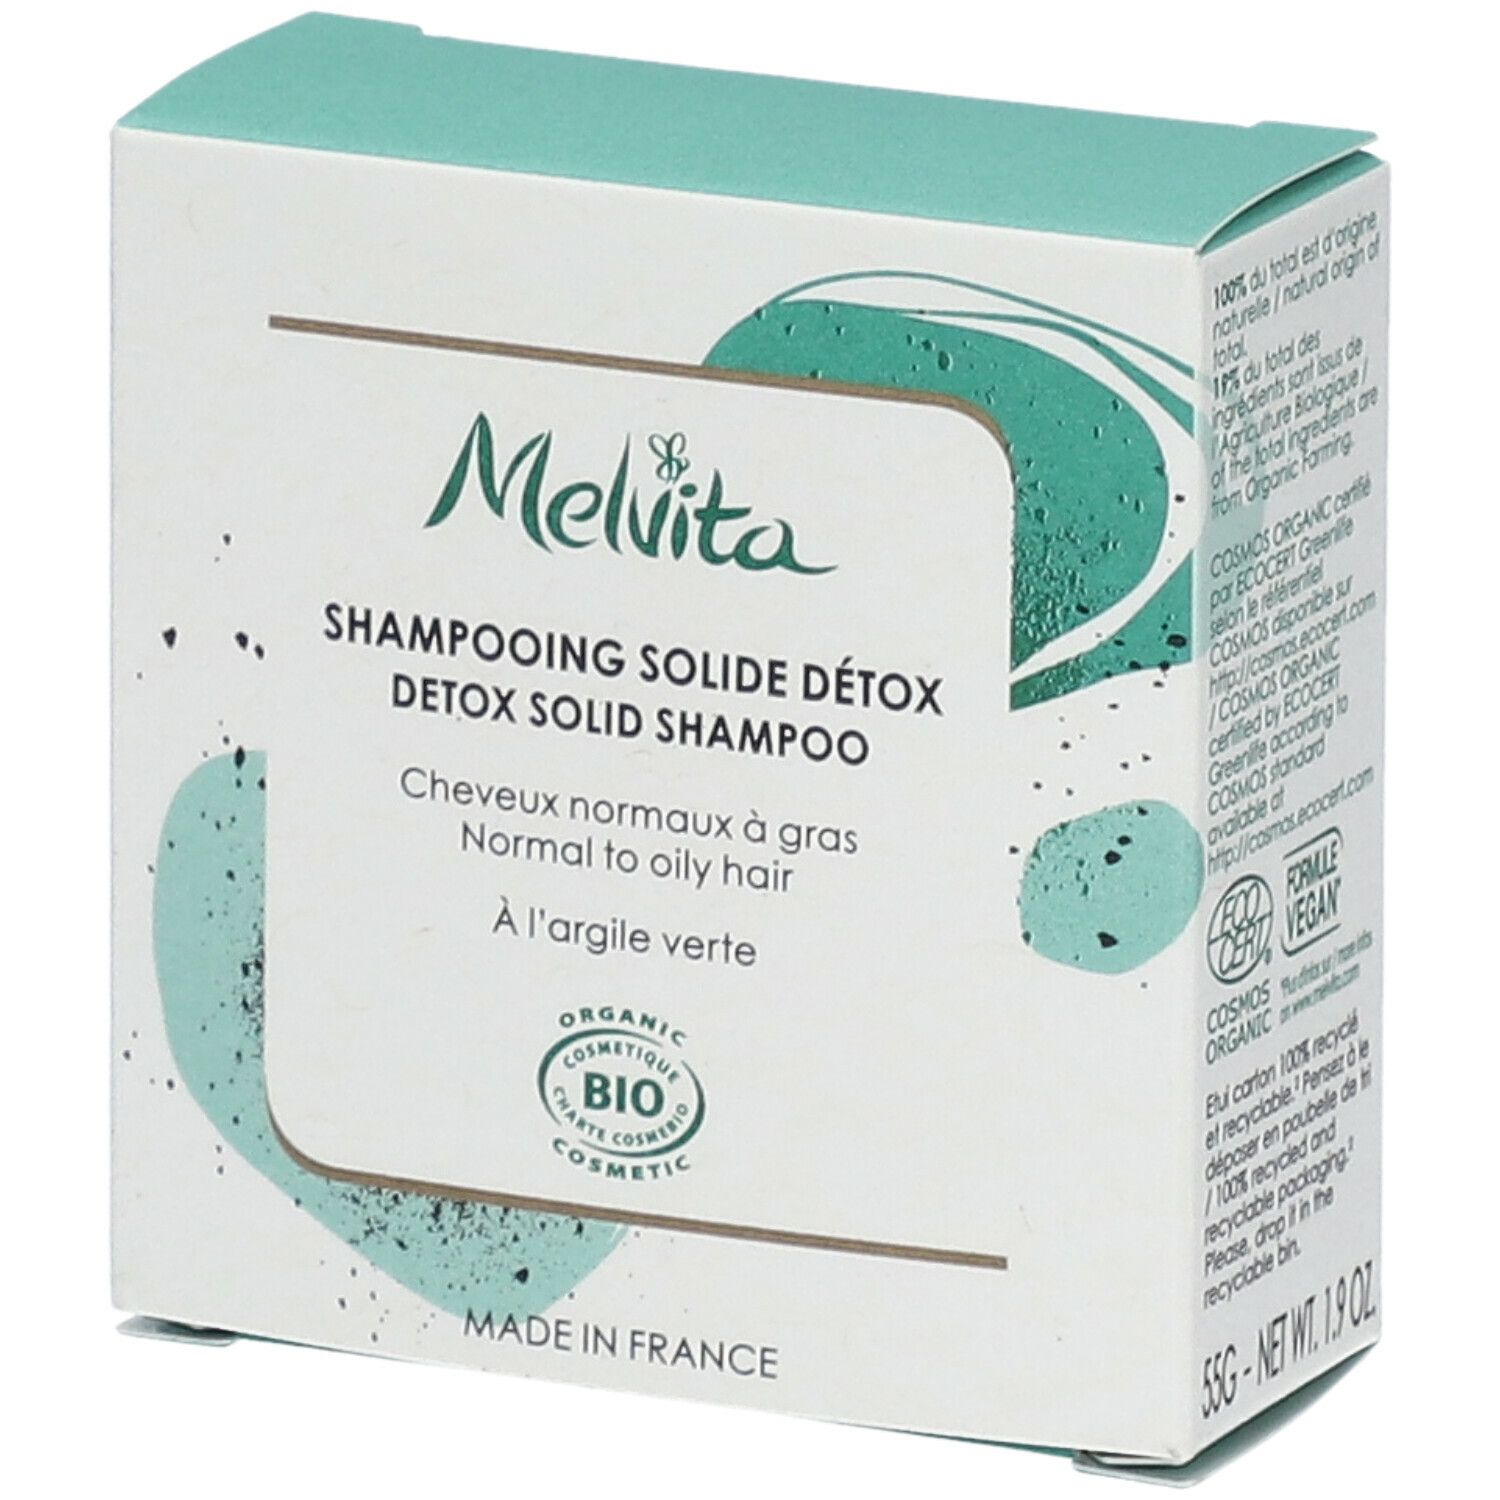 Melvita Shampoing solide detox